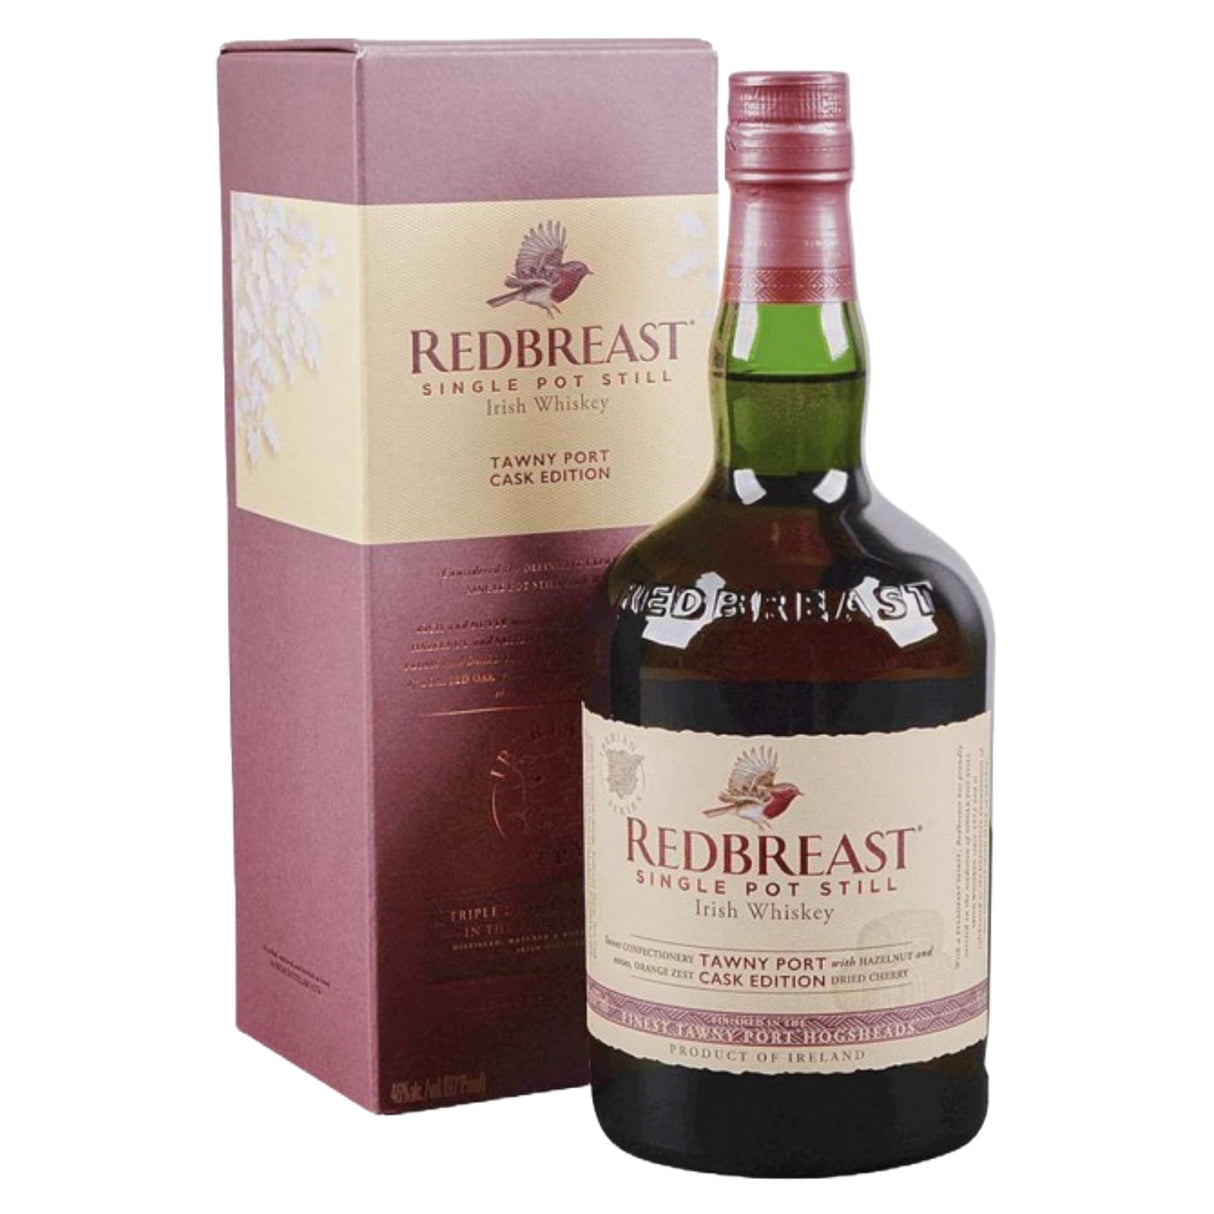 Redbreast Tawny Port Cask Edition Single Pot Still Irish Whiskey